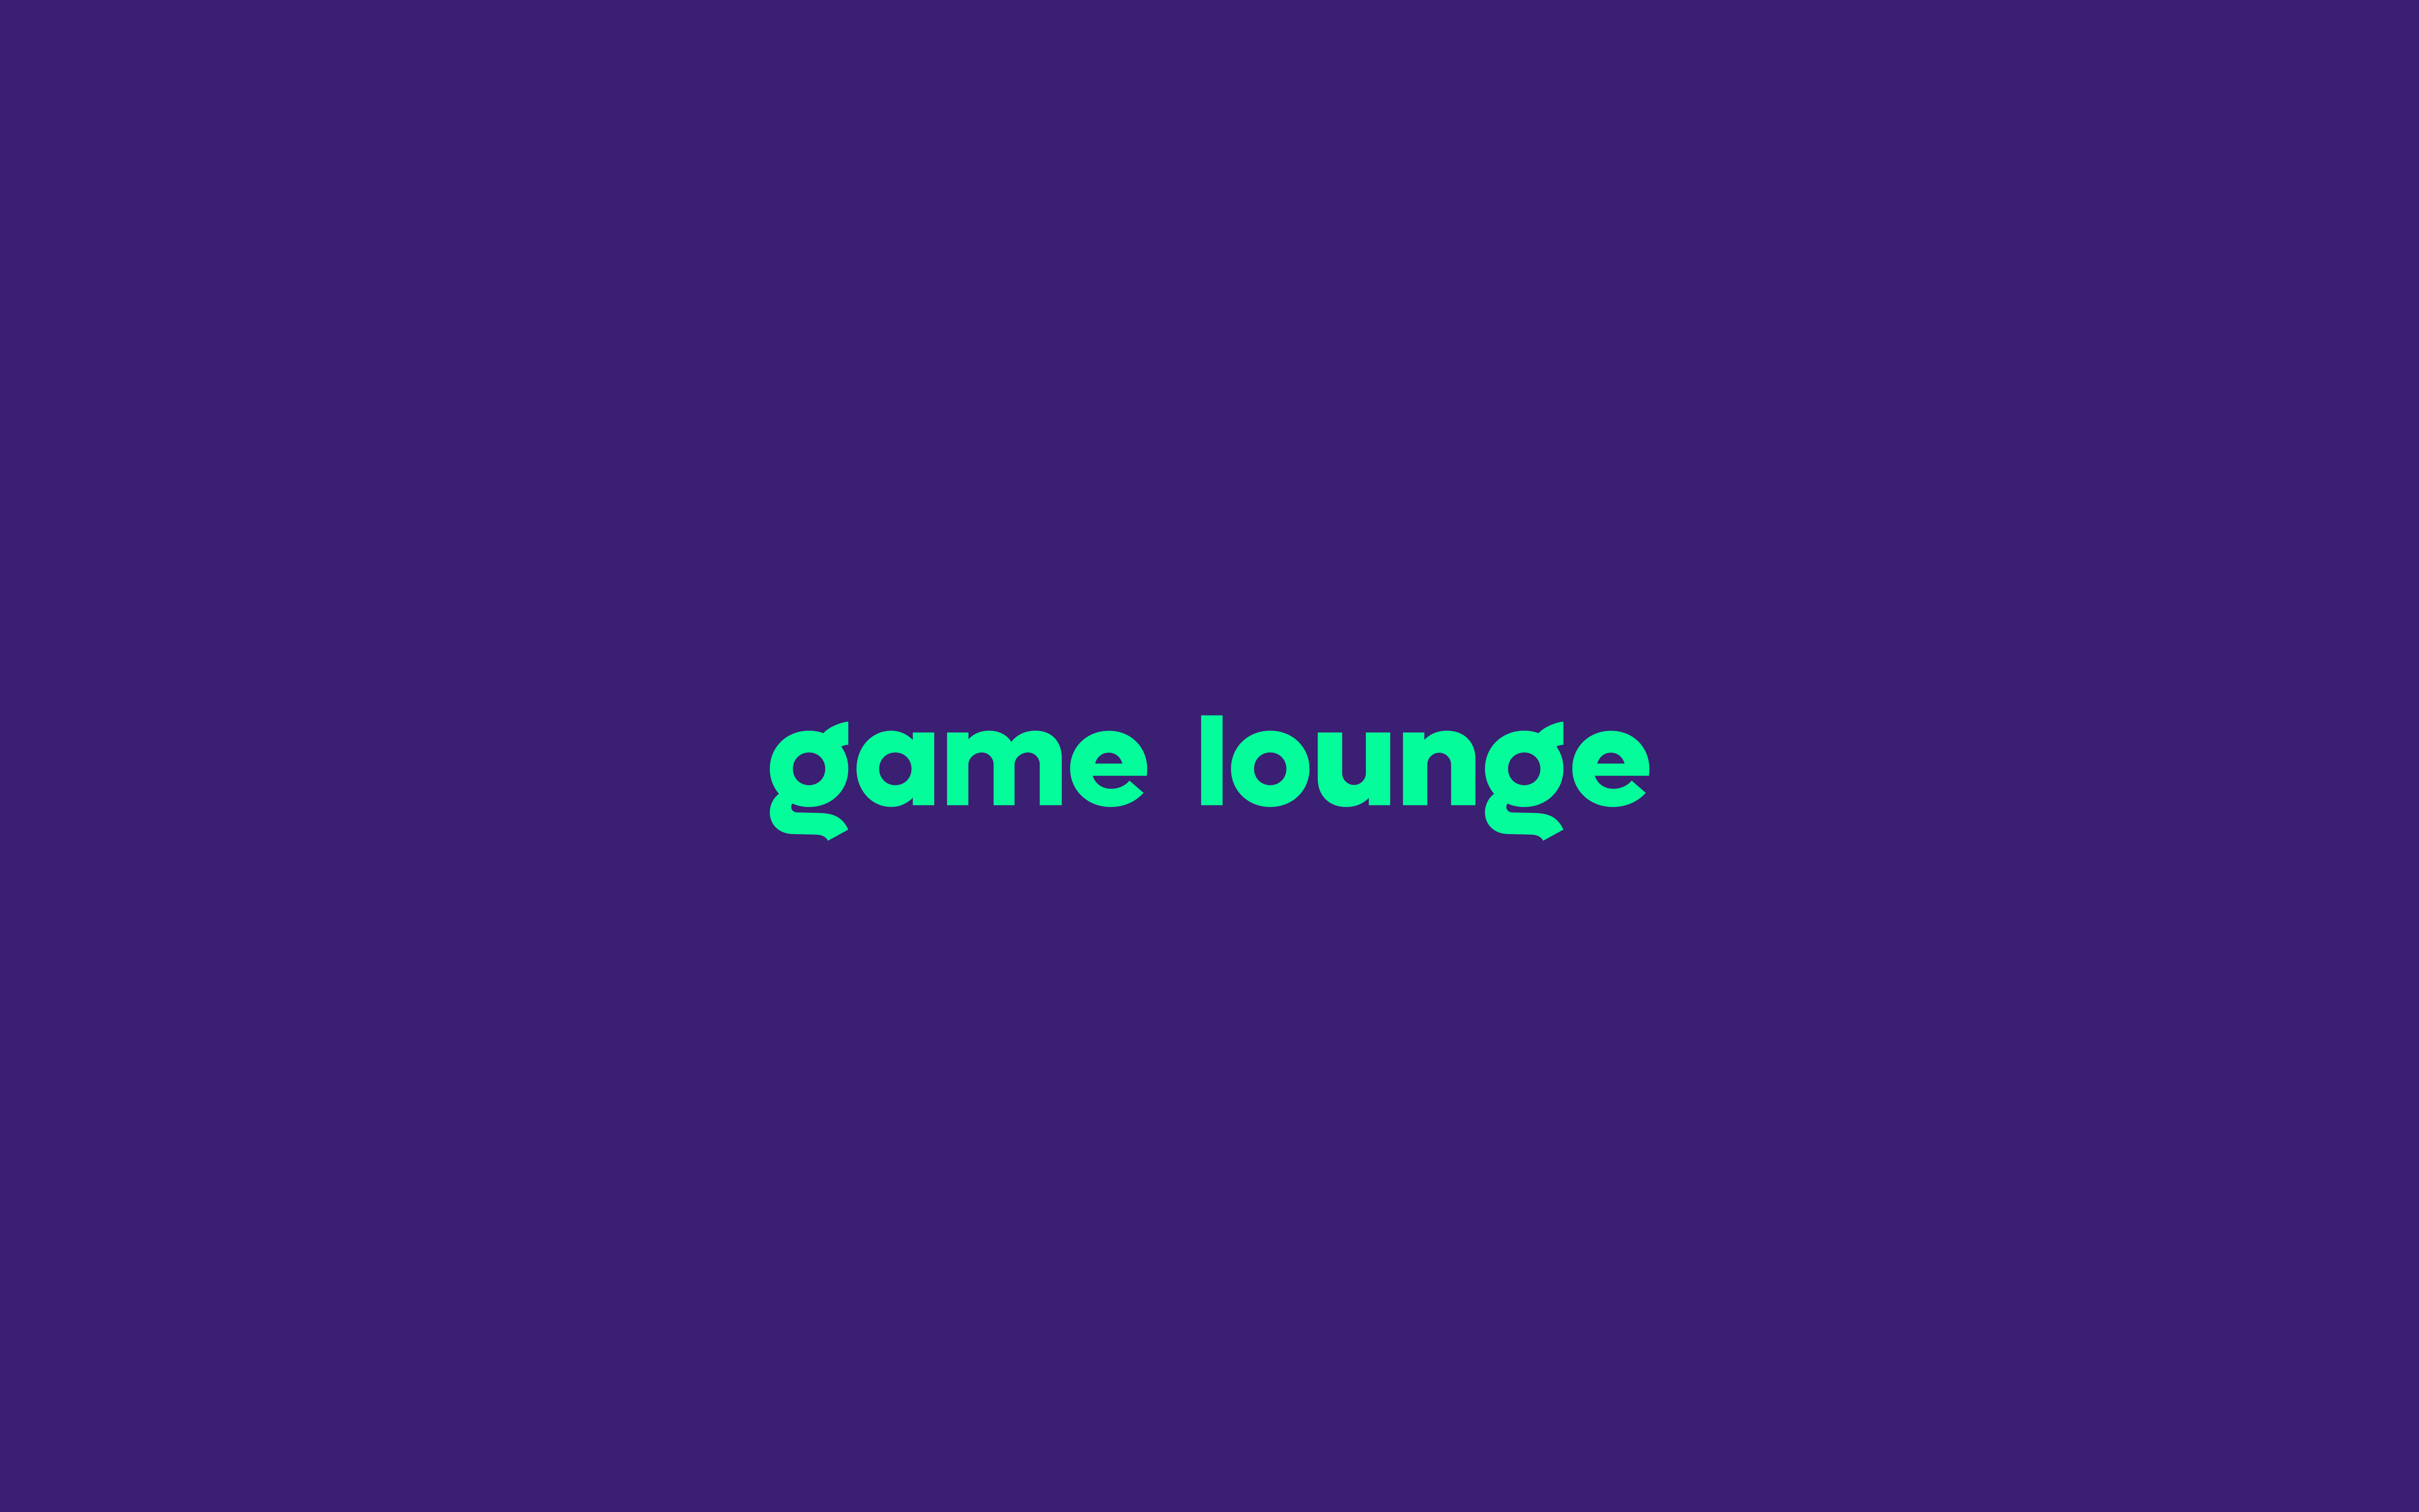 Game Lounge nominado para los Premios SBC Latinoamérica